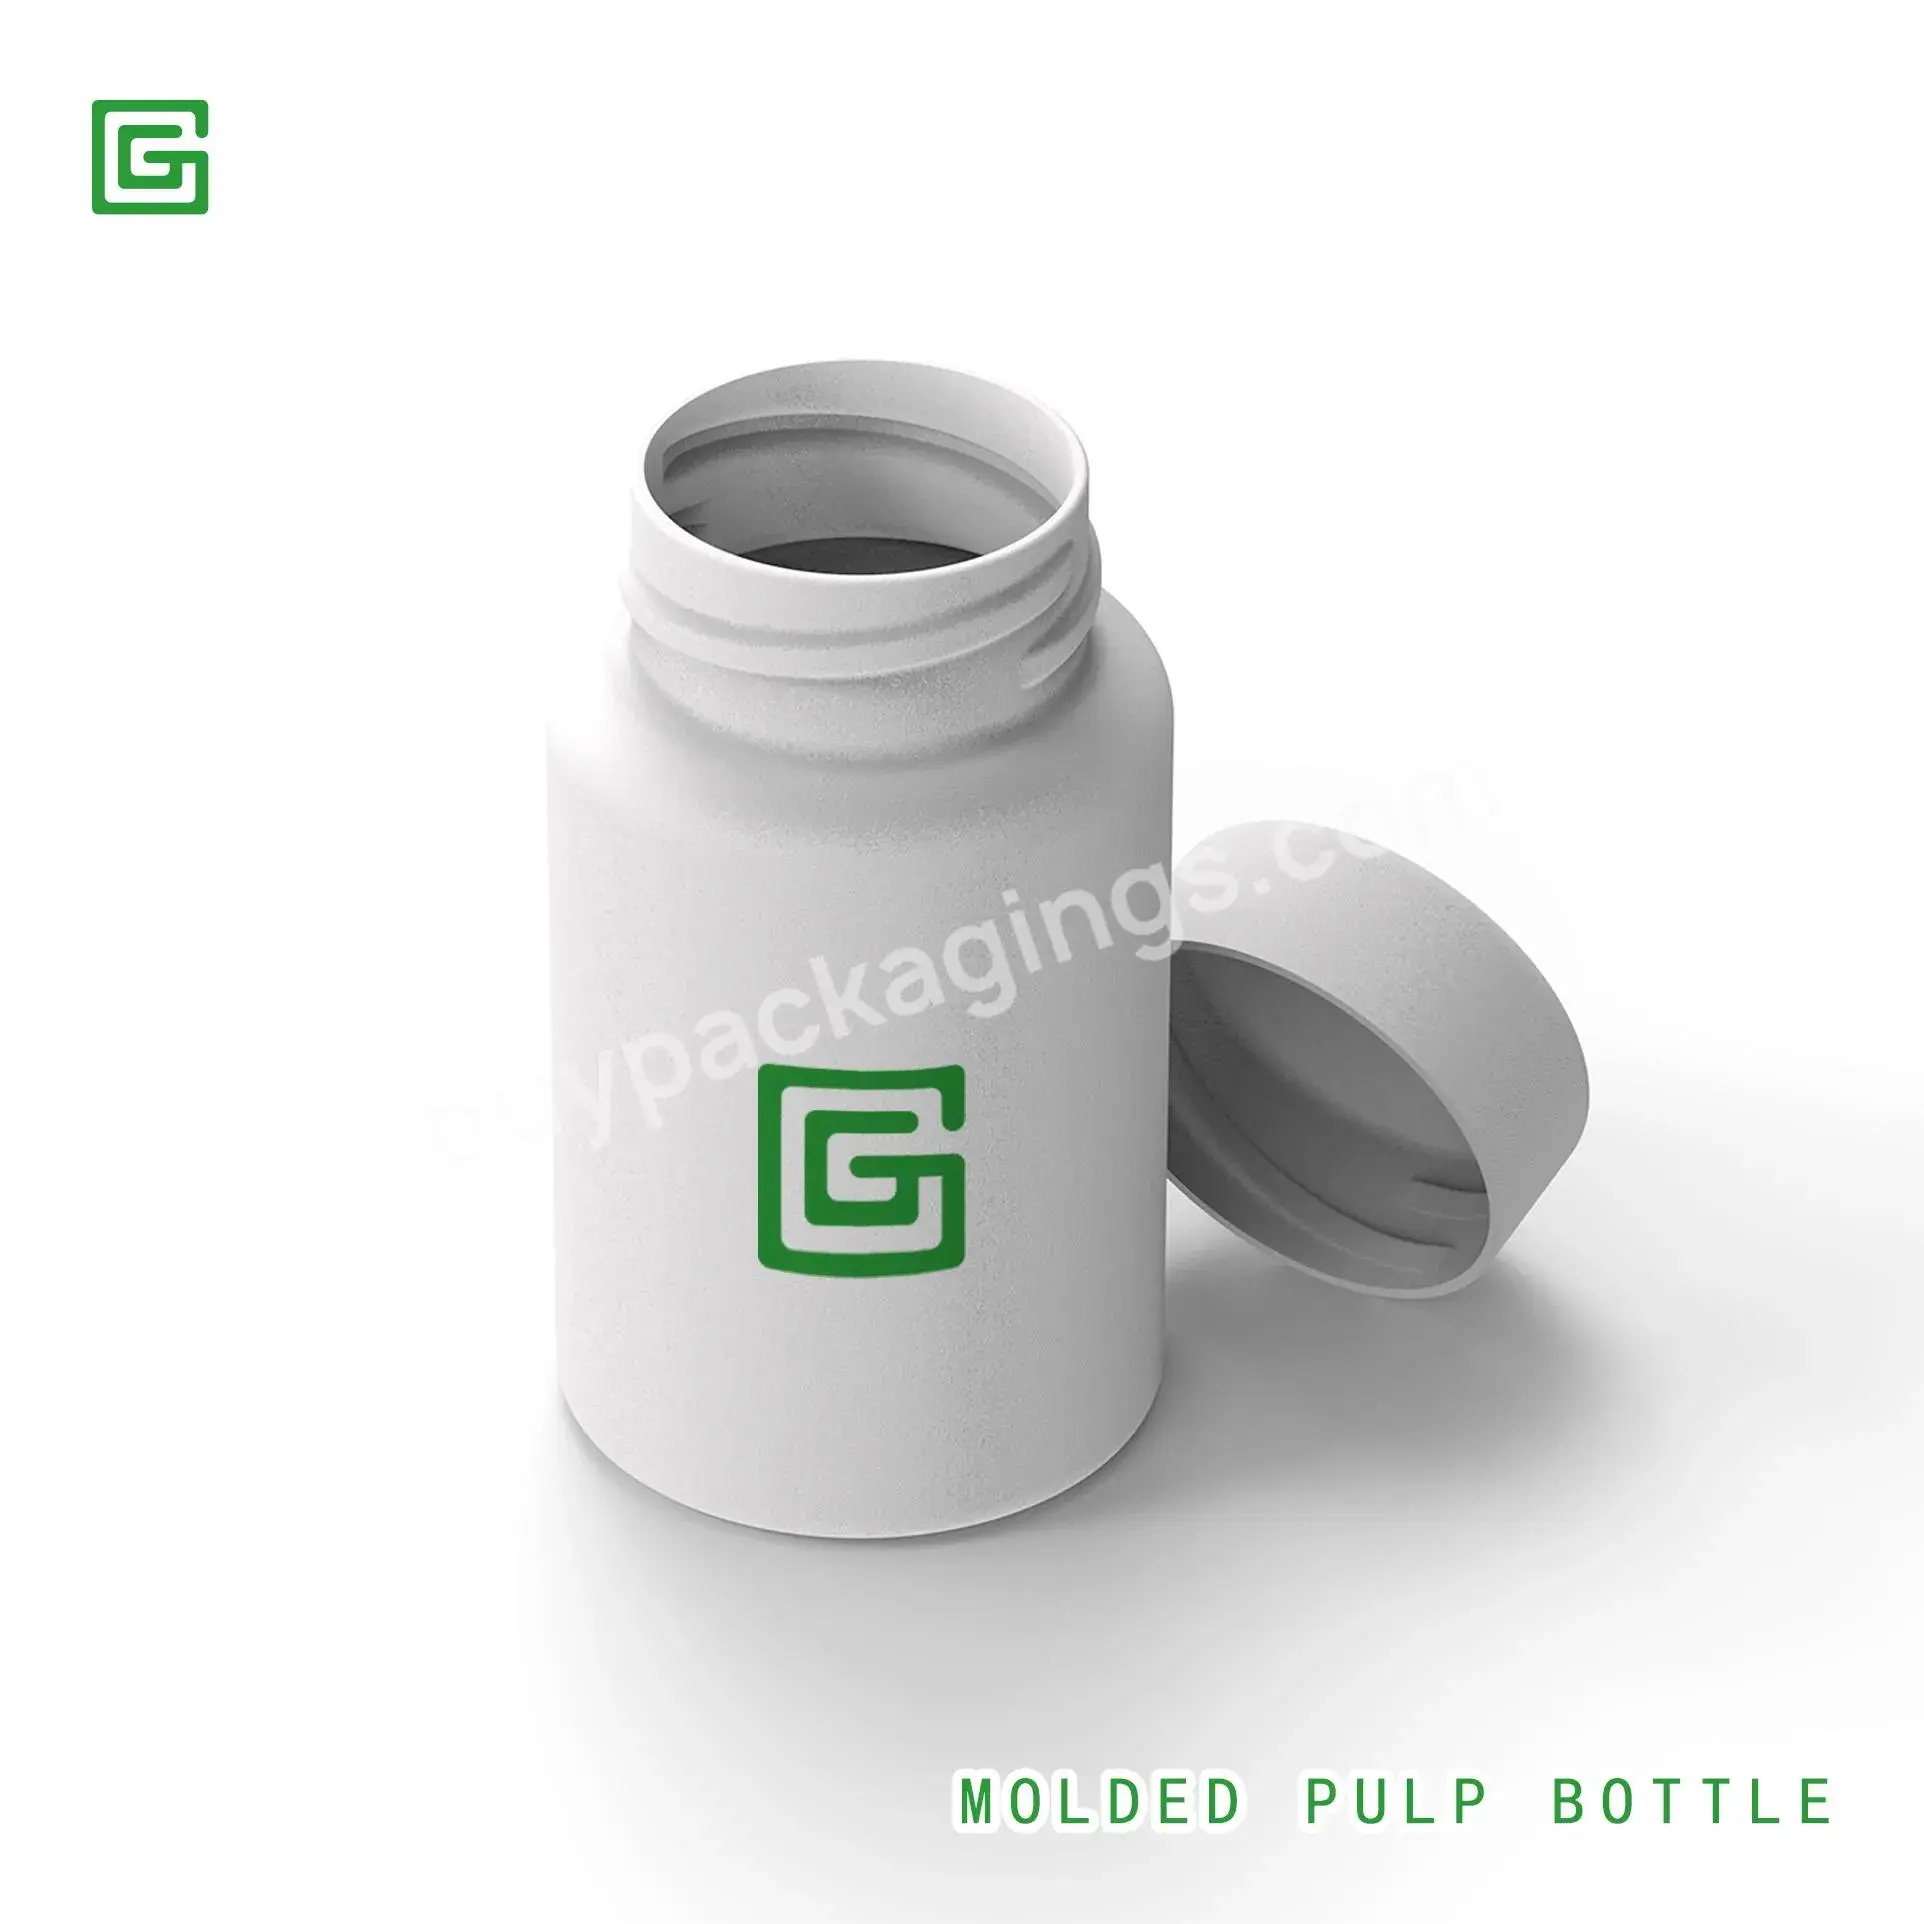 100% Safe Biodegradable Customized Medical Bottle Molded Pulp Paper Boxes Packaging - Buy Biodegradable Medicine Bottle,Paper Pulp Bottle,Biodegradable Bottle.